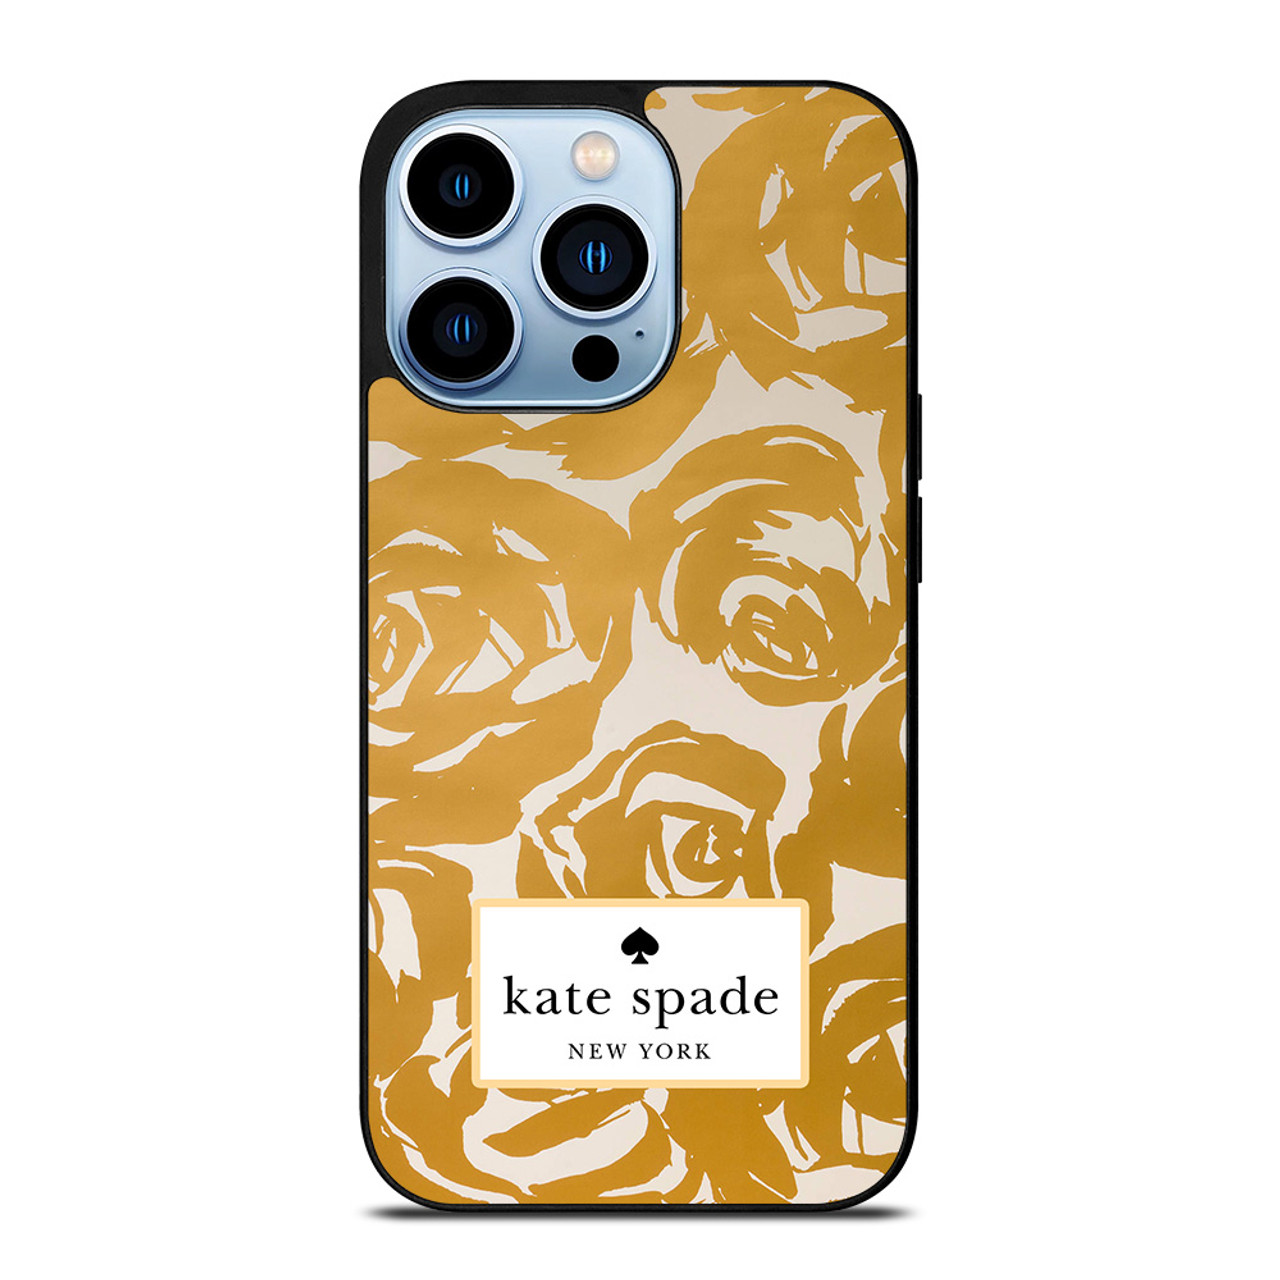 kate spade, Accessories, Kate Spade Phone Case Iphone 6